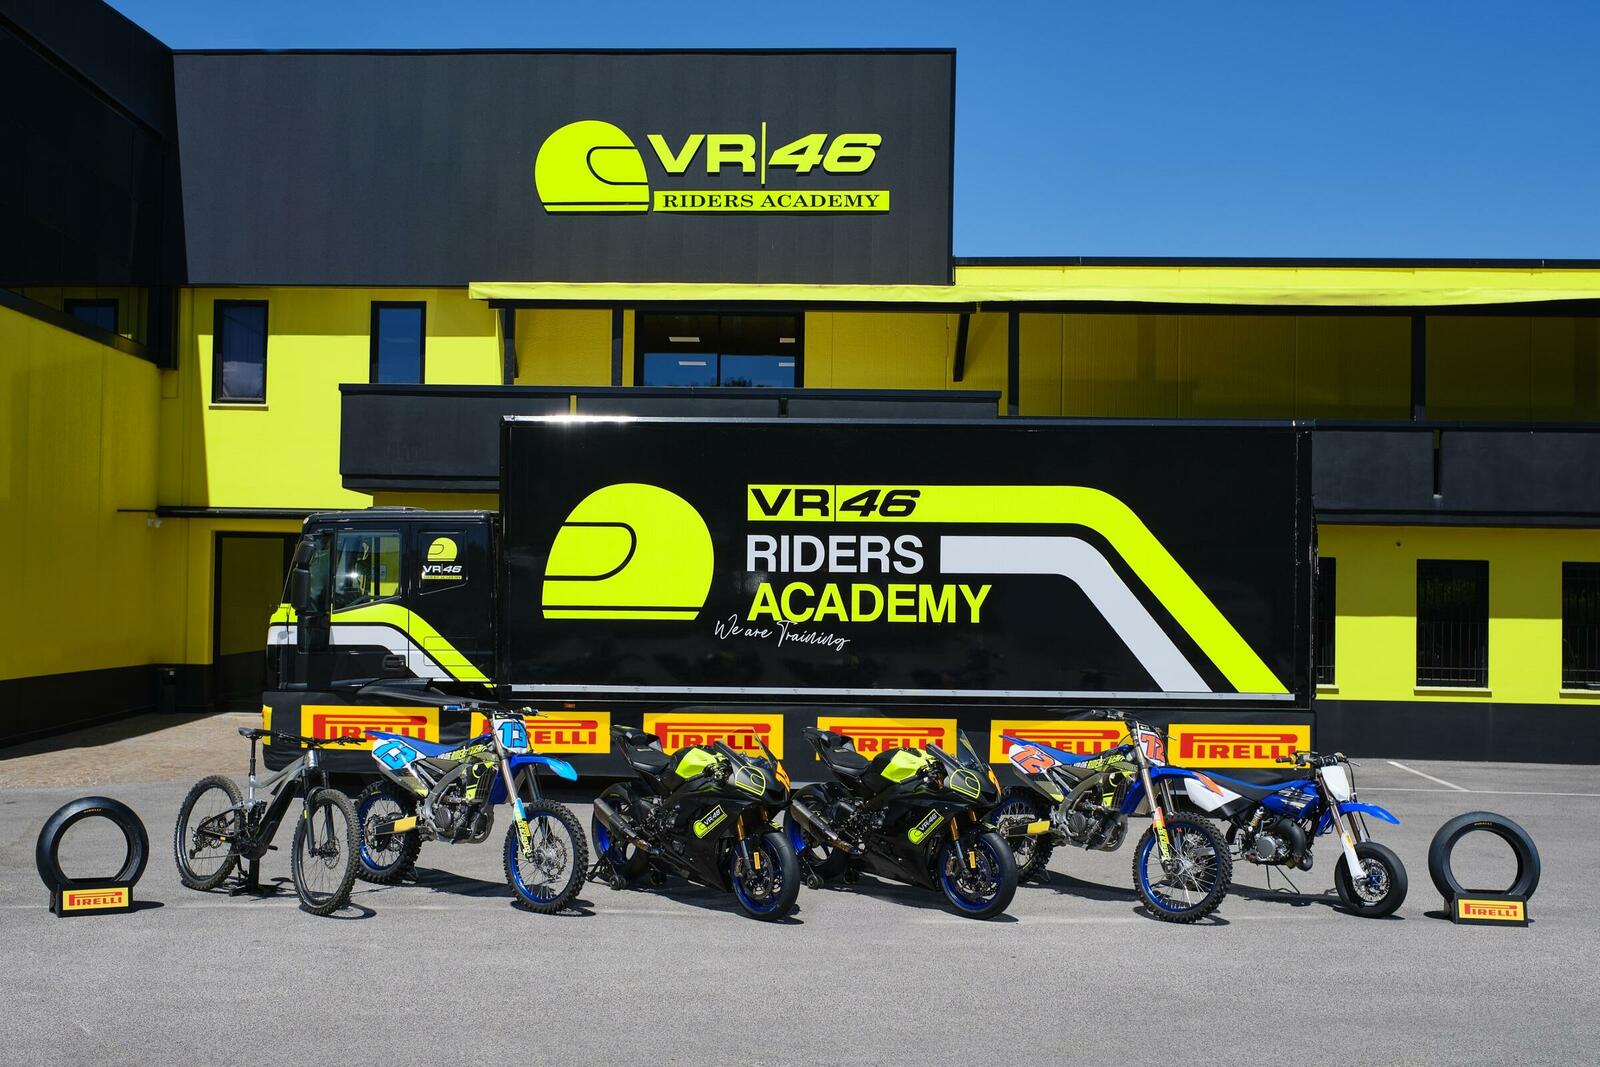 vr46-riders-academy-fleet.jpeg